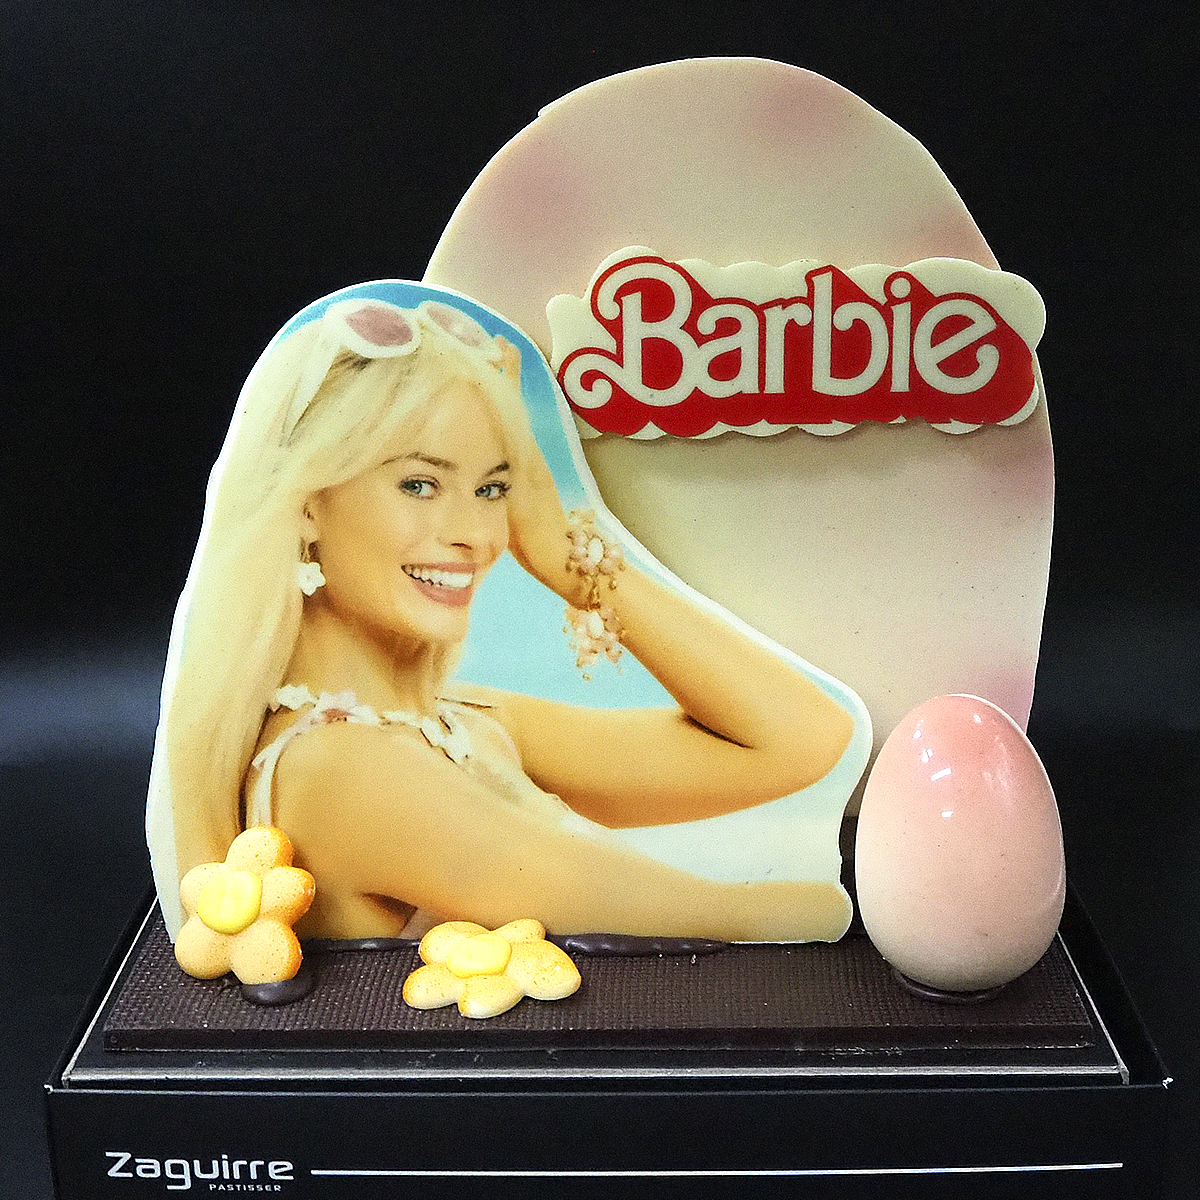 Mona de Pasqua artesanal elaborada per Zaguirre Pastisser amb la figura de la Barbie